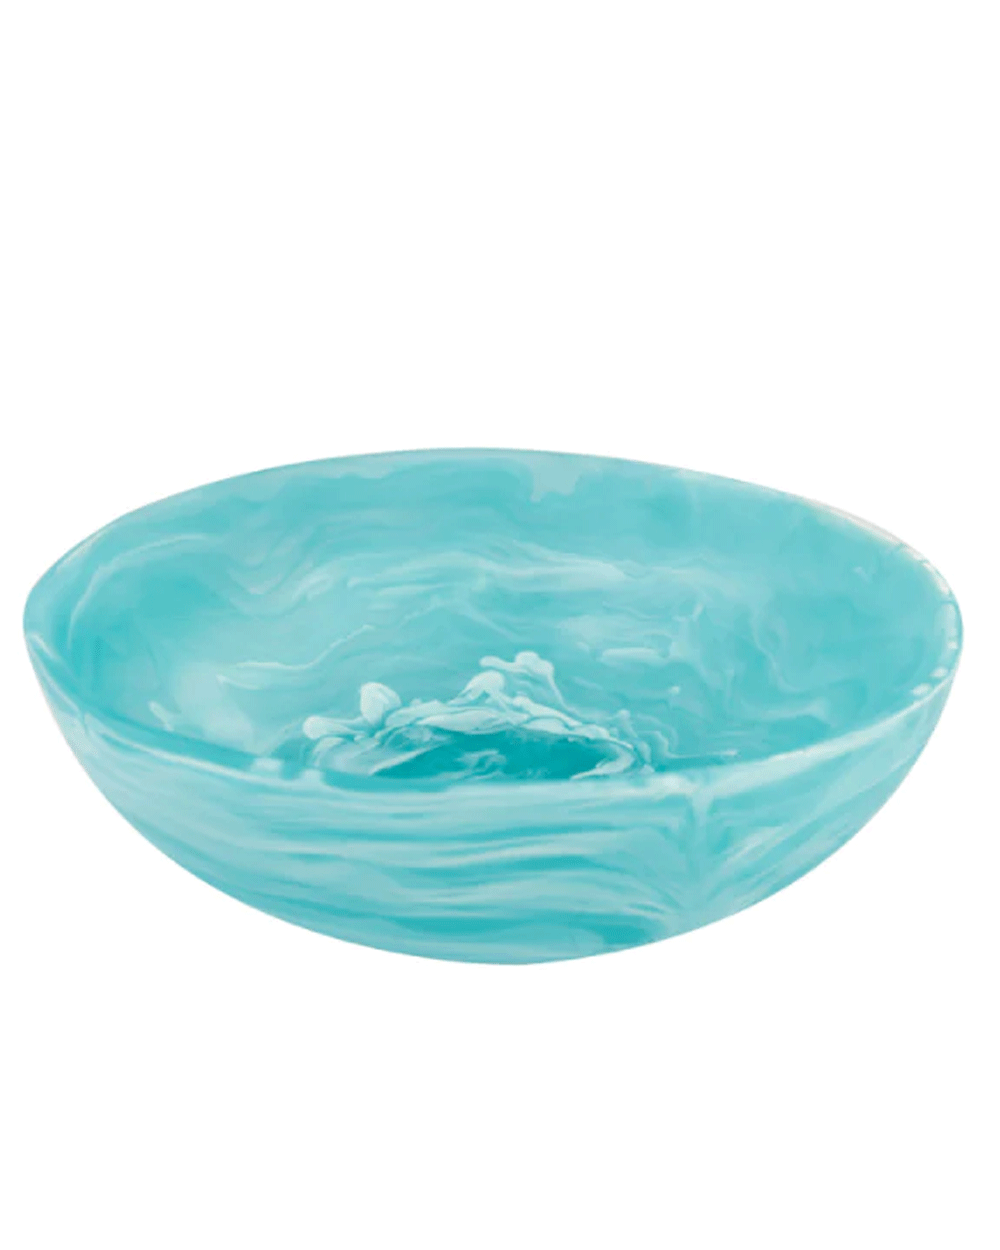 Large Wave Bowl in Aqua Swirl